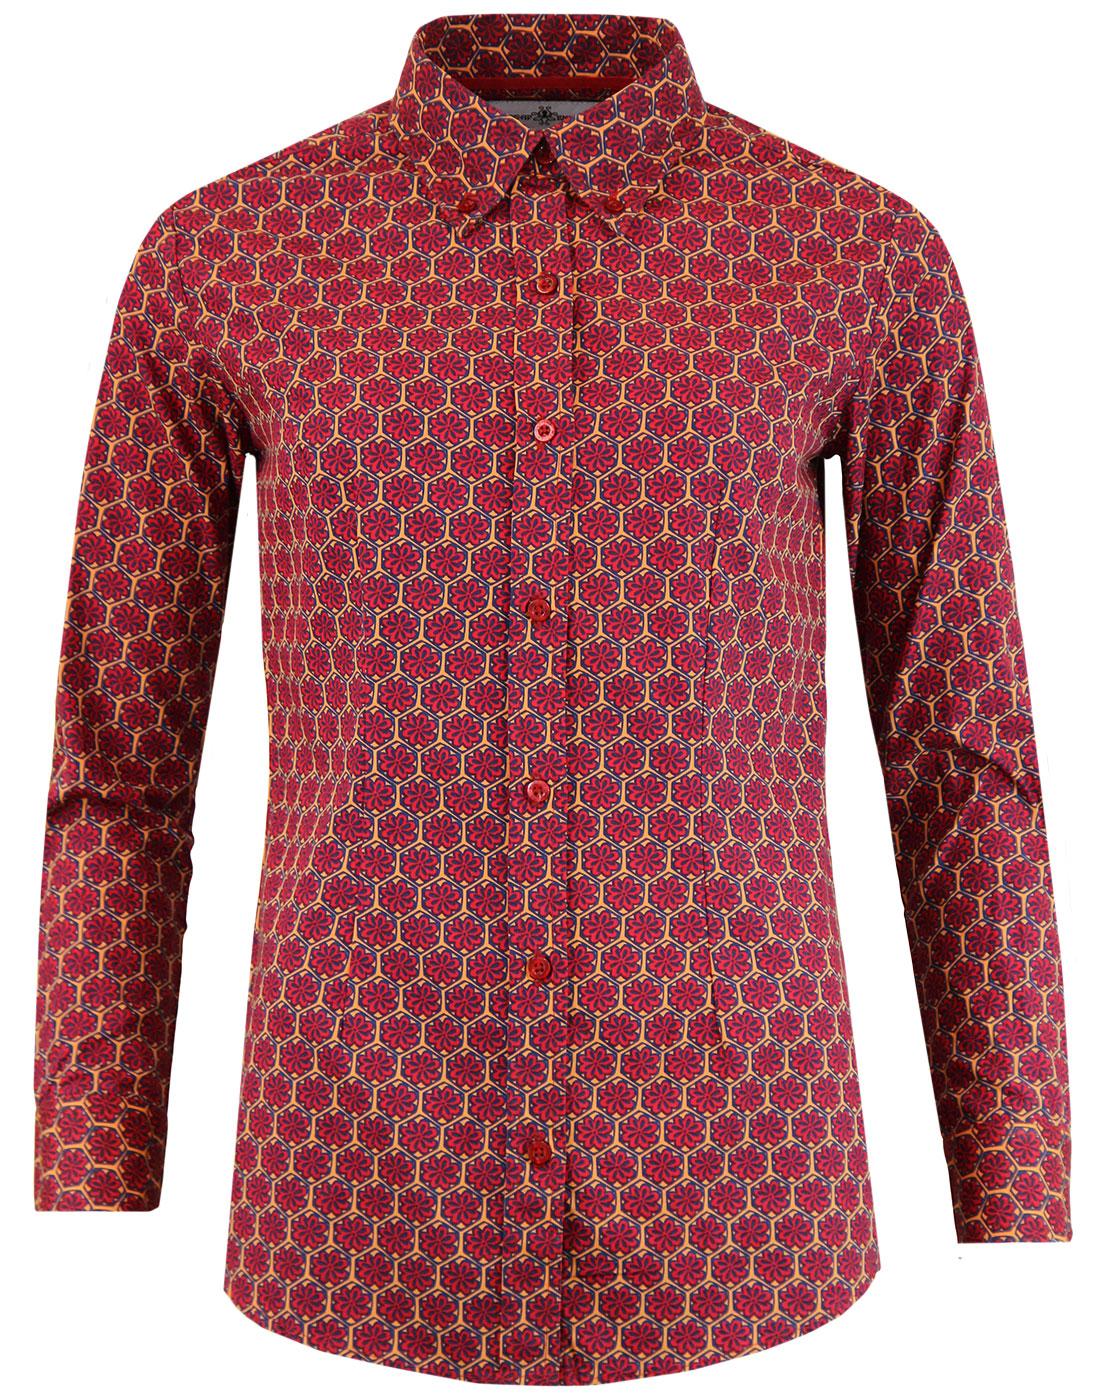 madcap england saffron floral hexagon shirt red